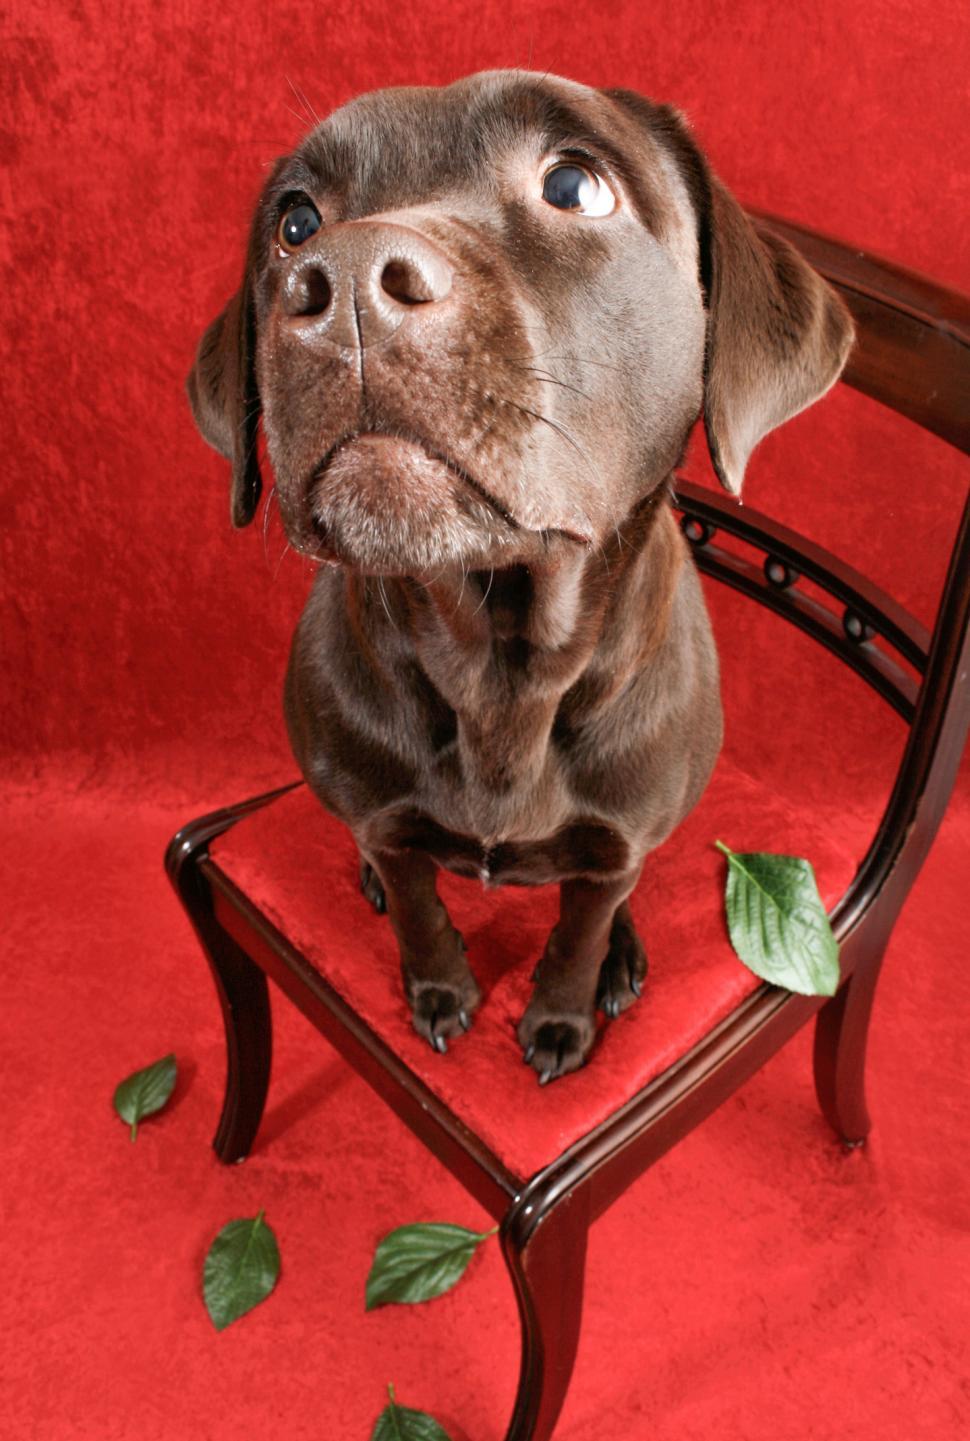 Free Image of Labrador dog on chair 